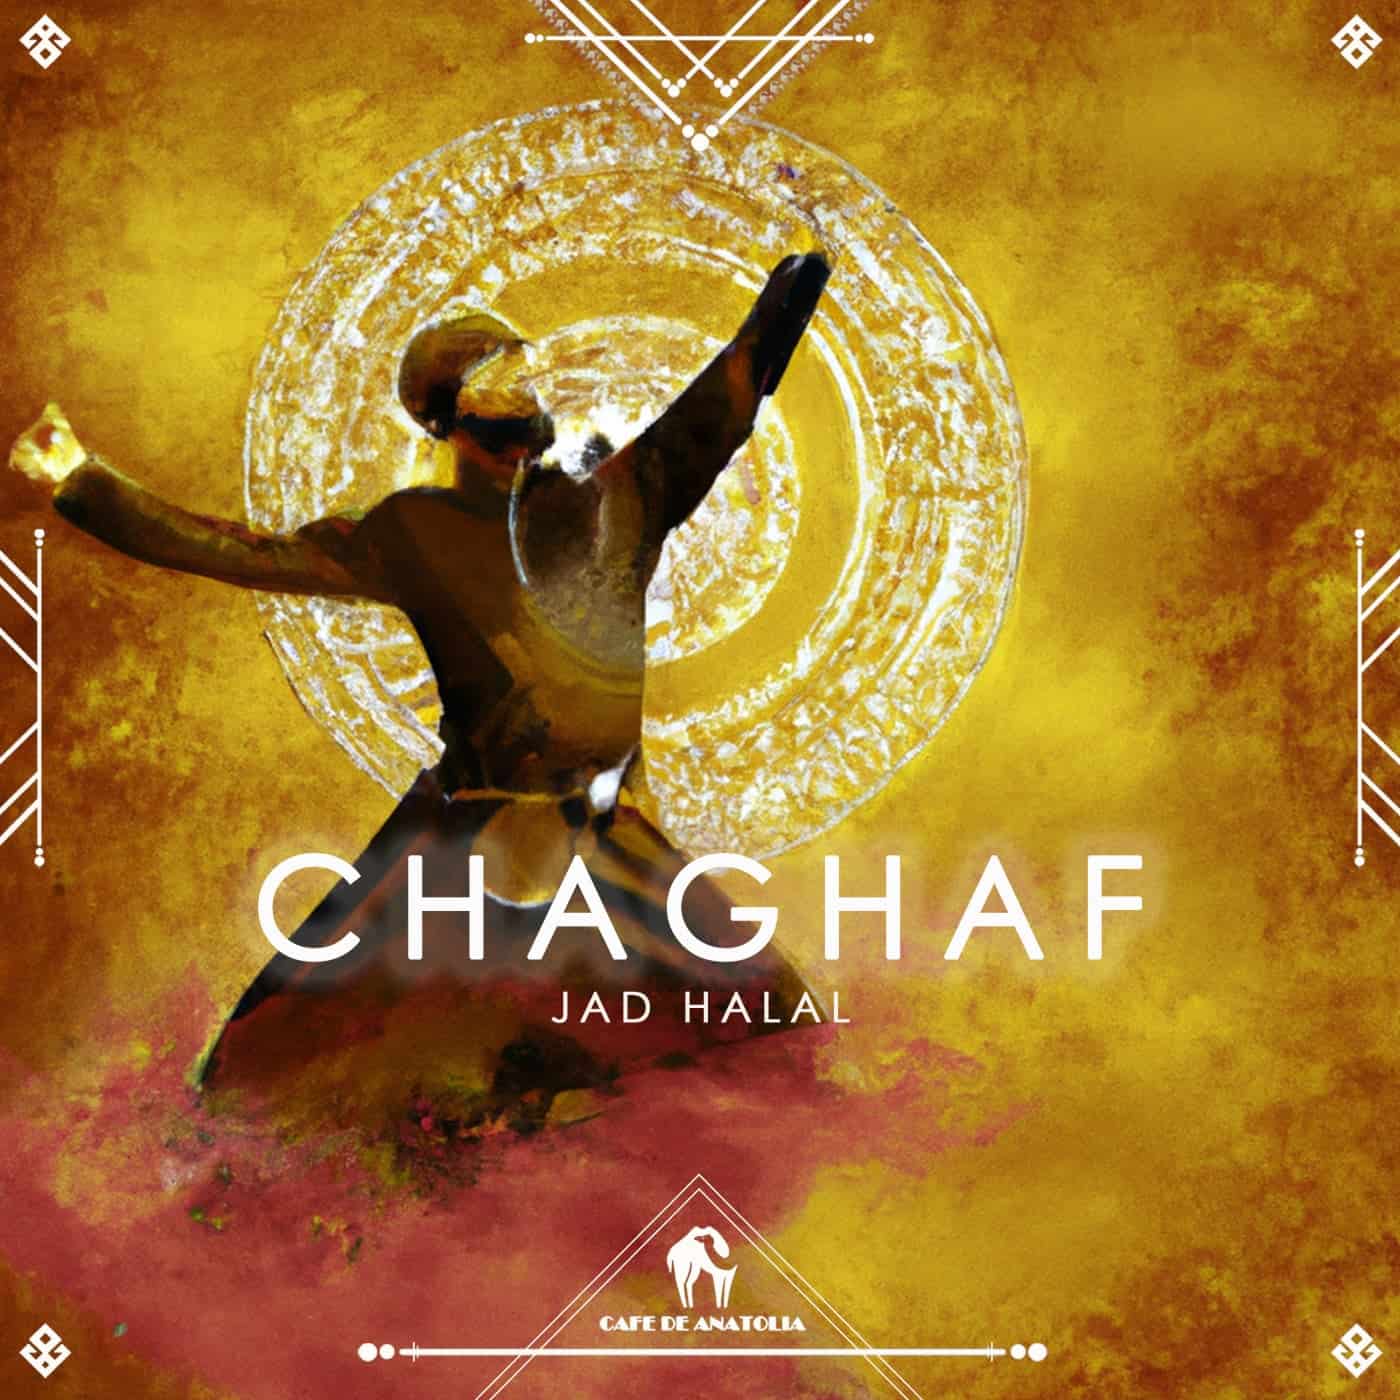 Download Jad Halal, Cafe De Anatolia - Chaghaf on Electrobuzz